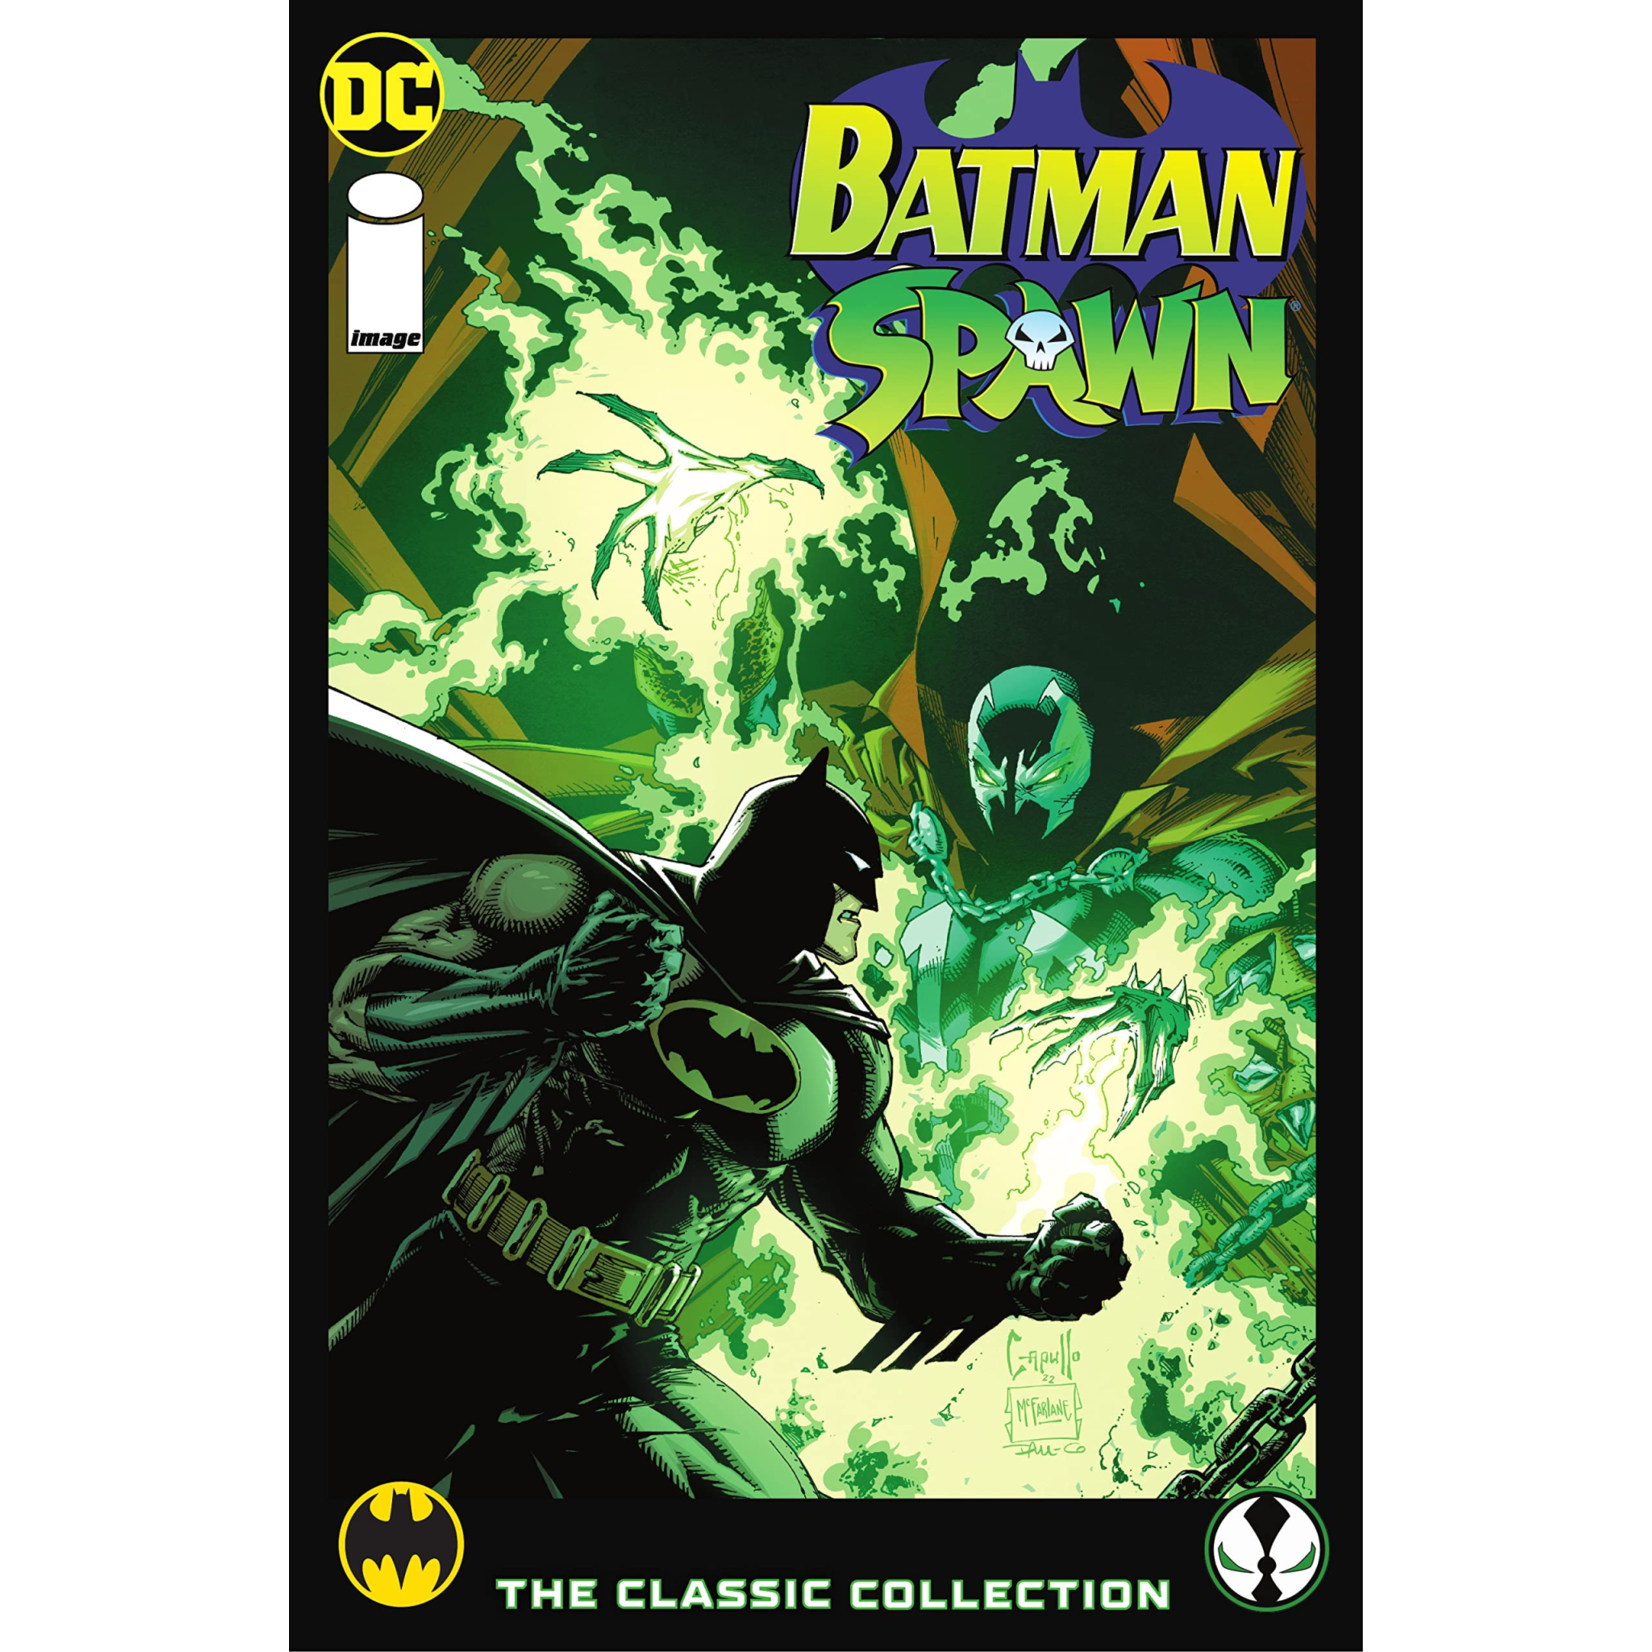 DC Comics BATMAN SPAWN THE CLASSIC COLLECTION HC